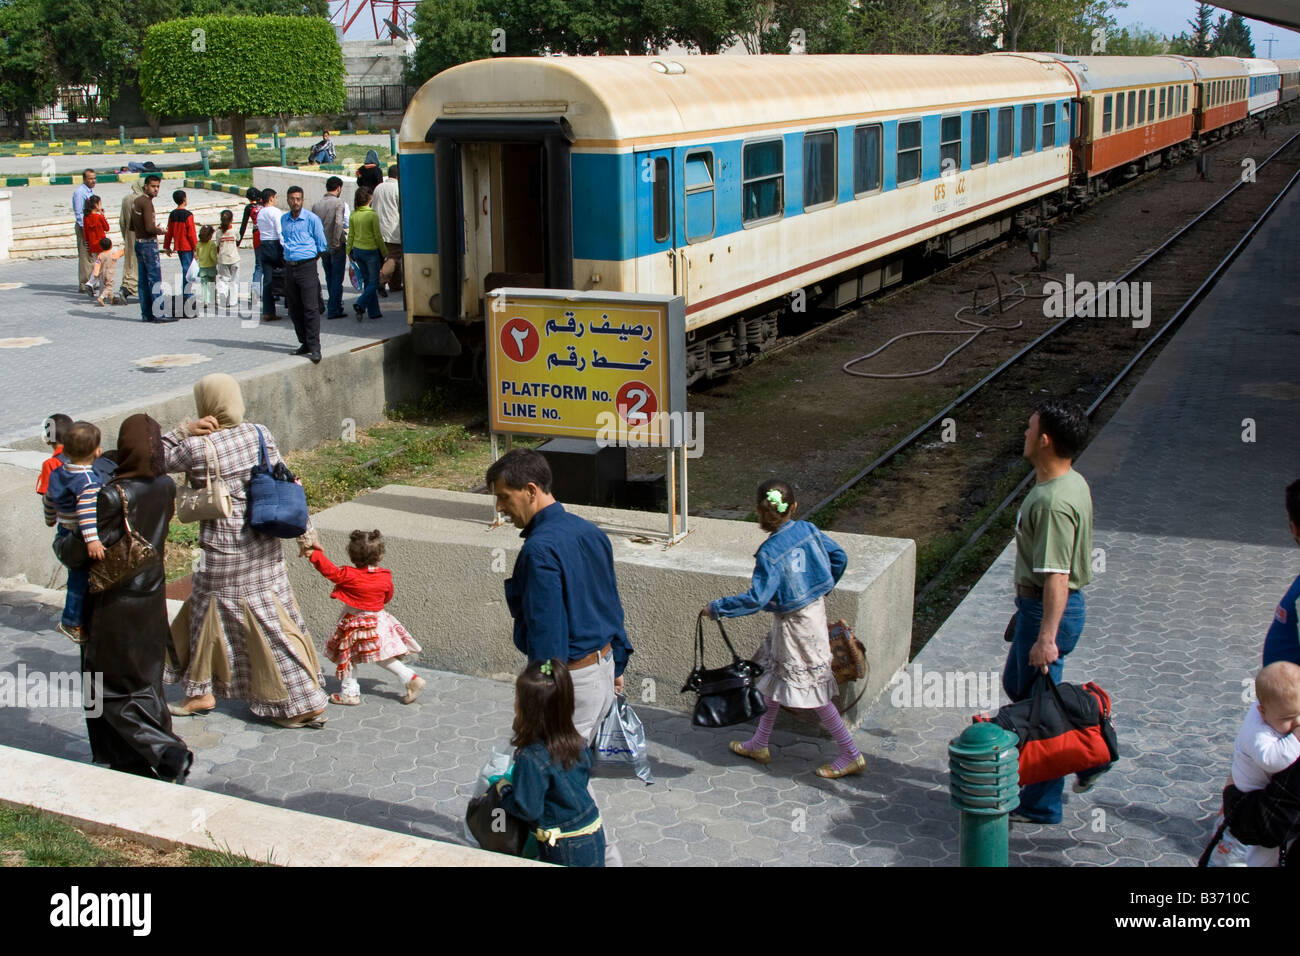 Railway Station in Lattakia Syria Stock Photo